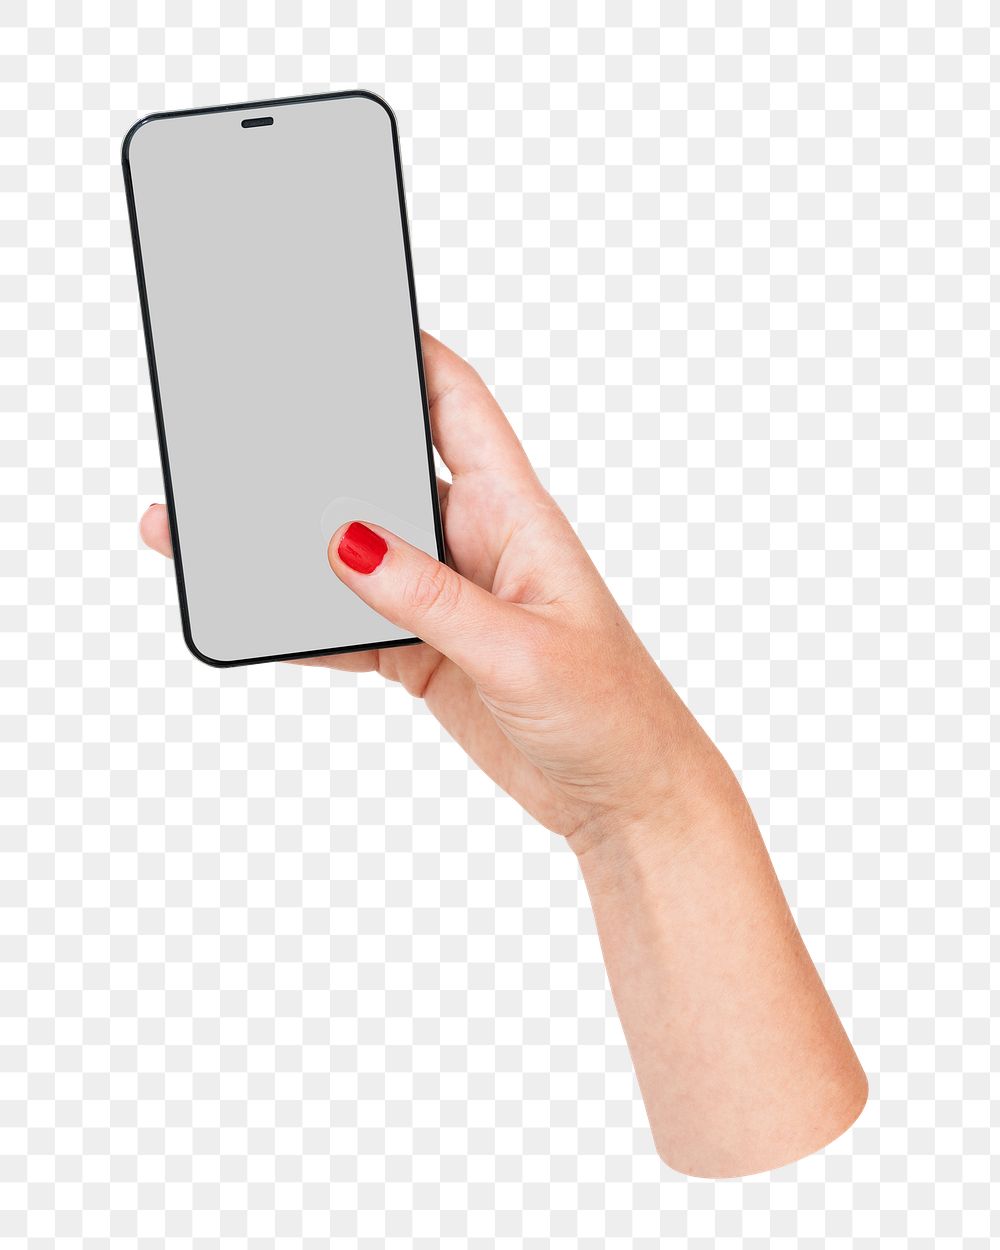 Holding smartphone png sticker, transparent background